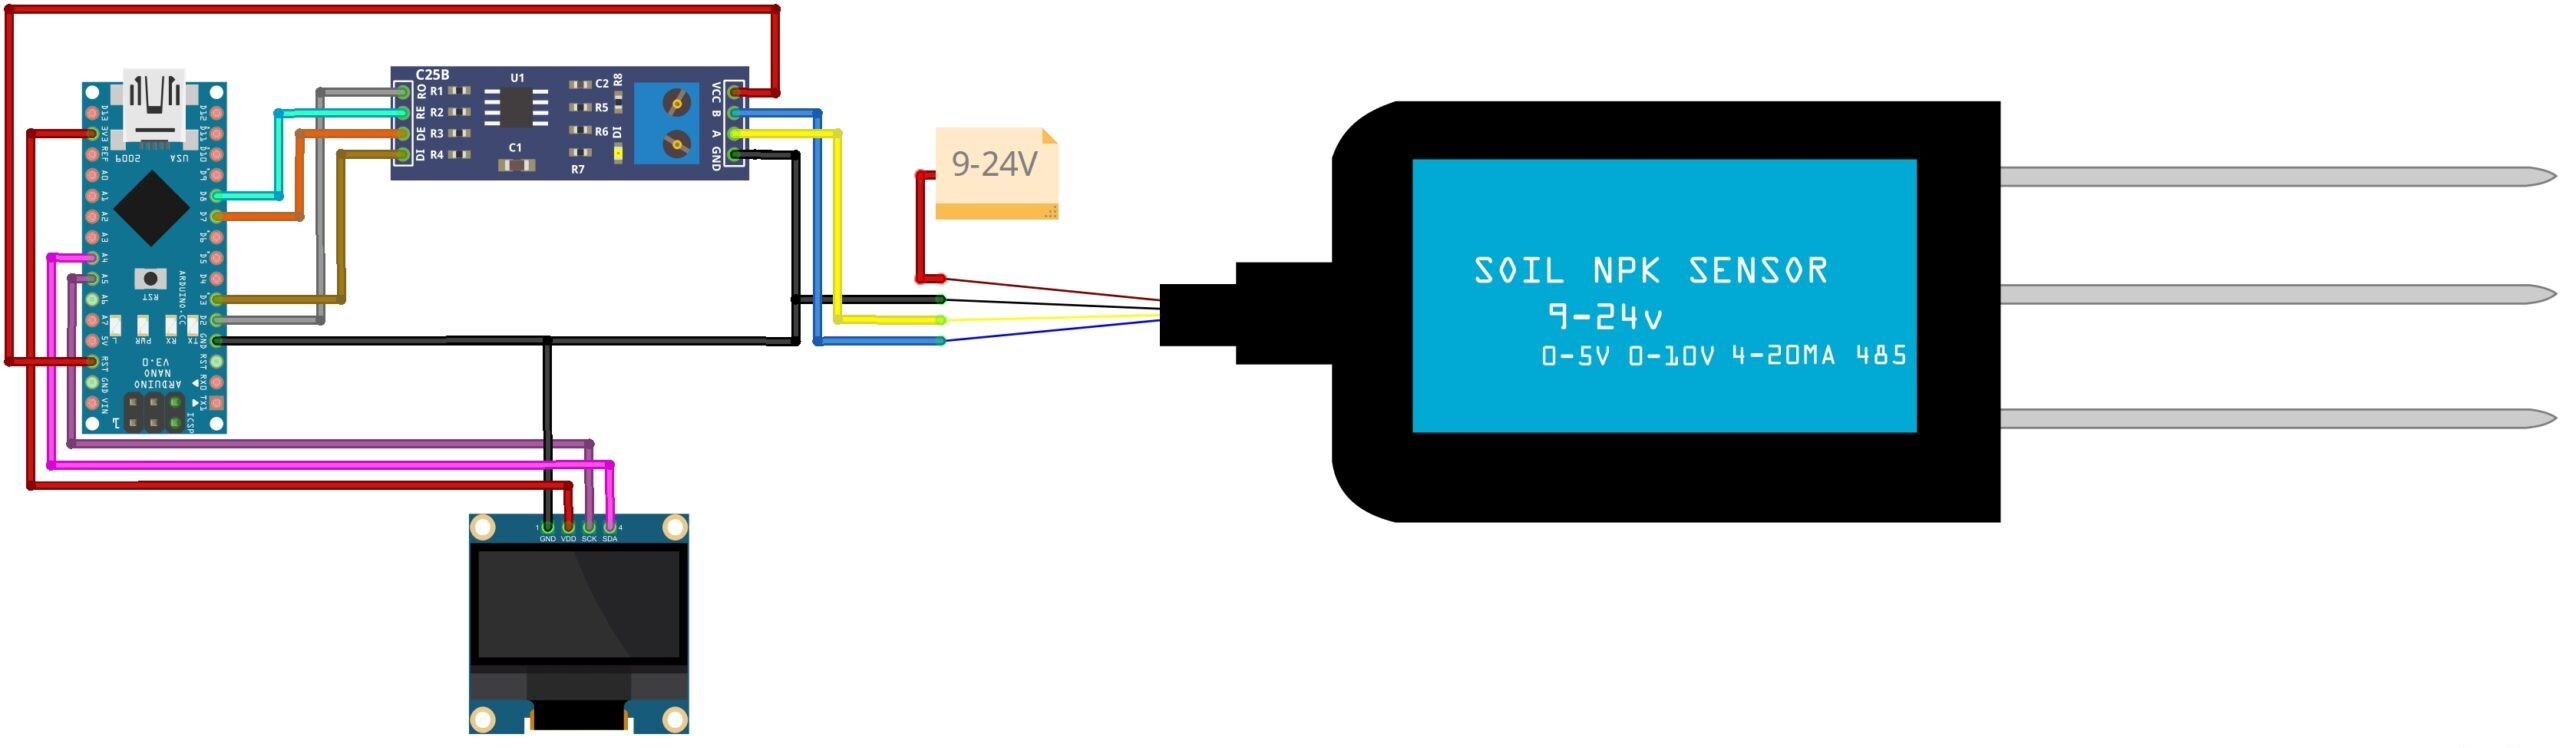 Real-Time Soil Nutrient Analysis with Arduino NPK Sensor